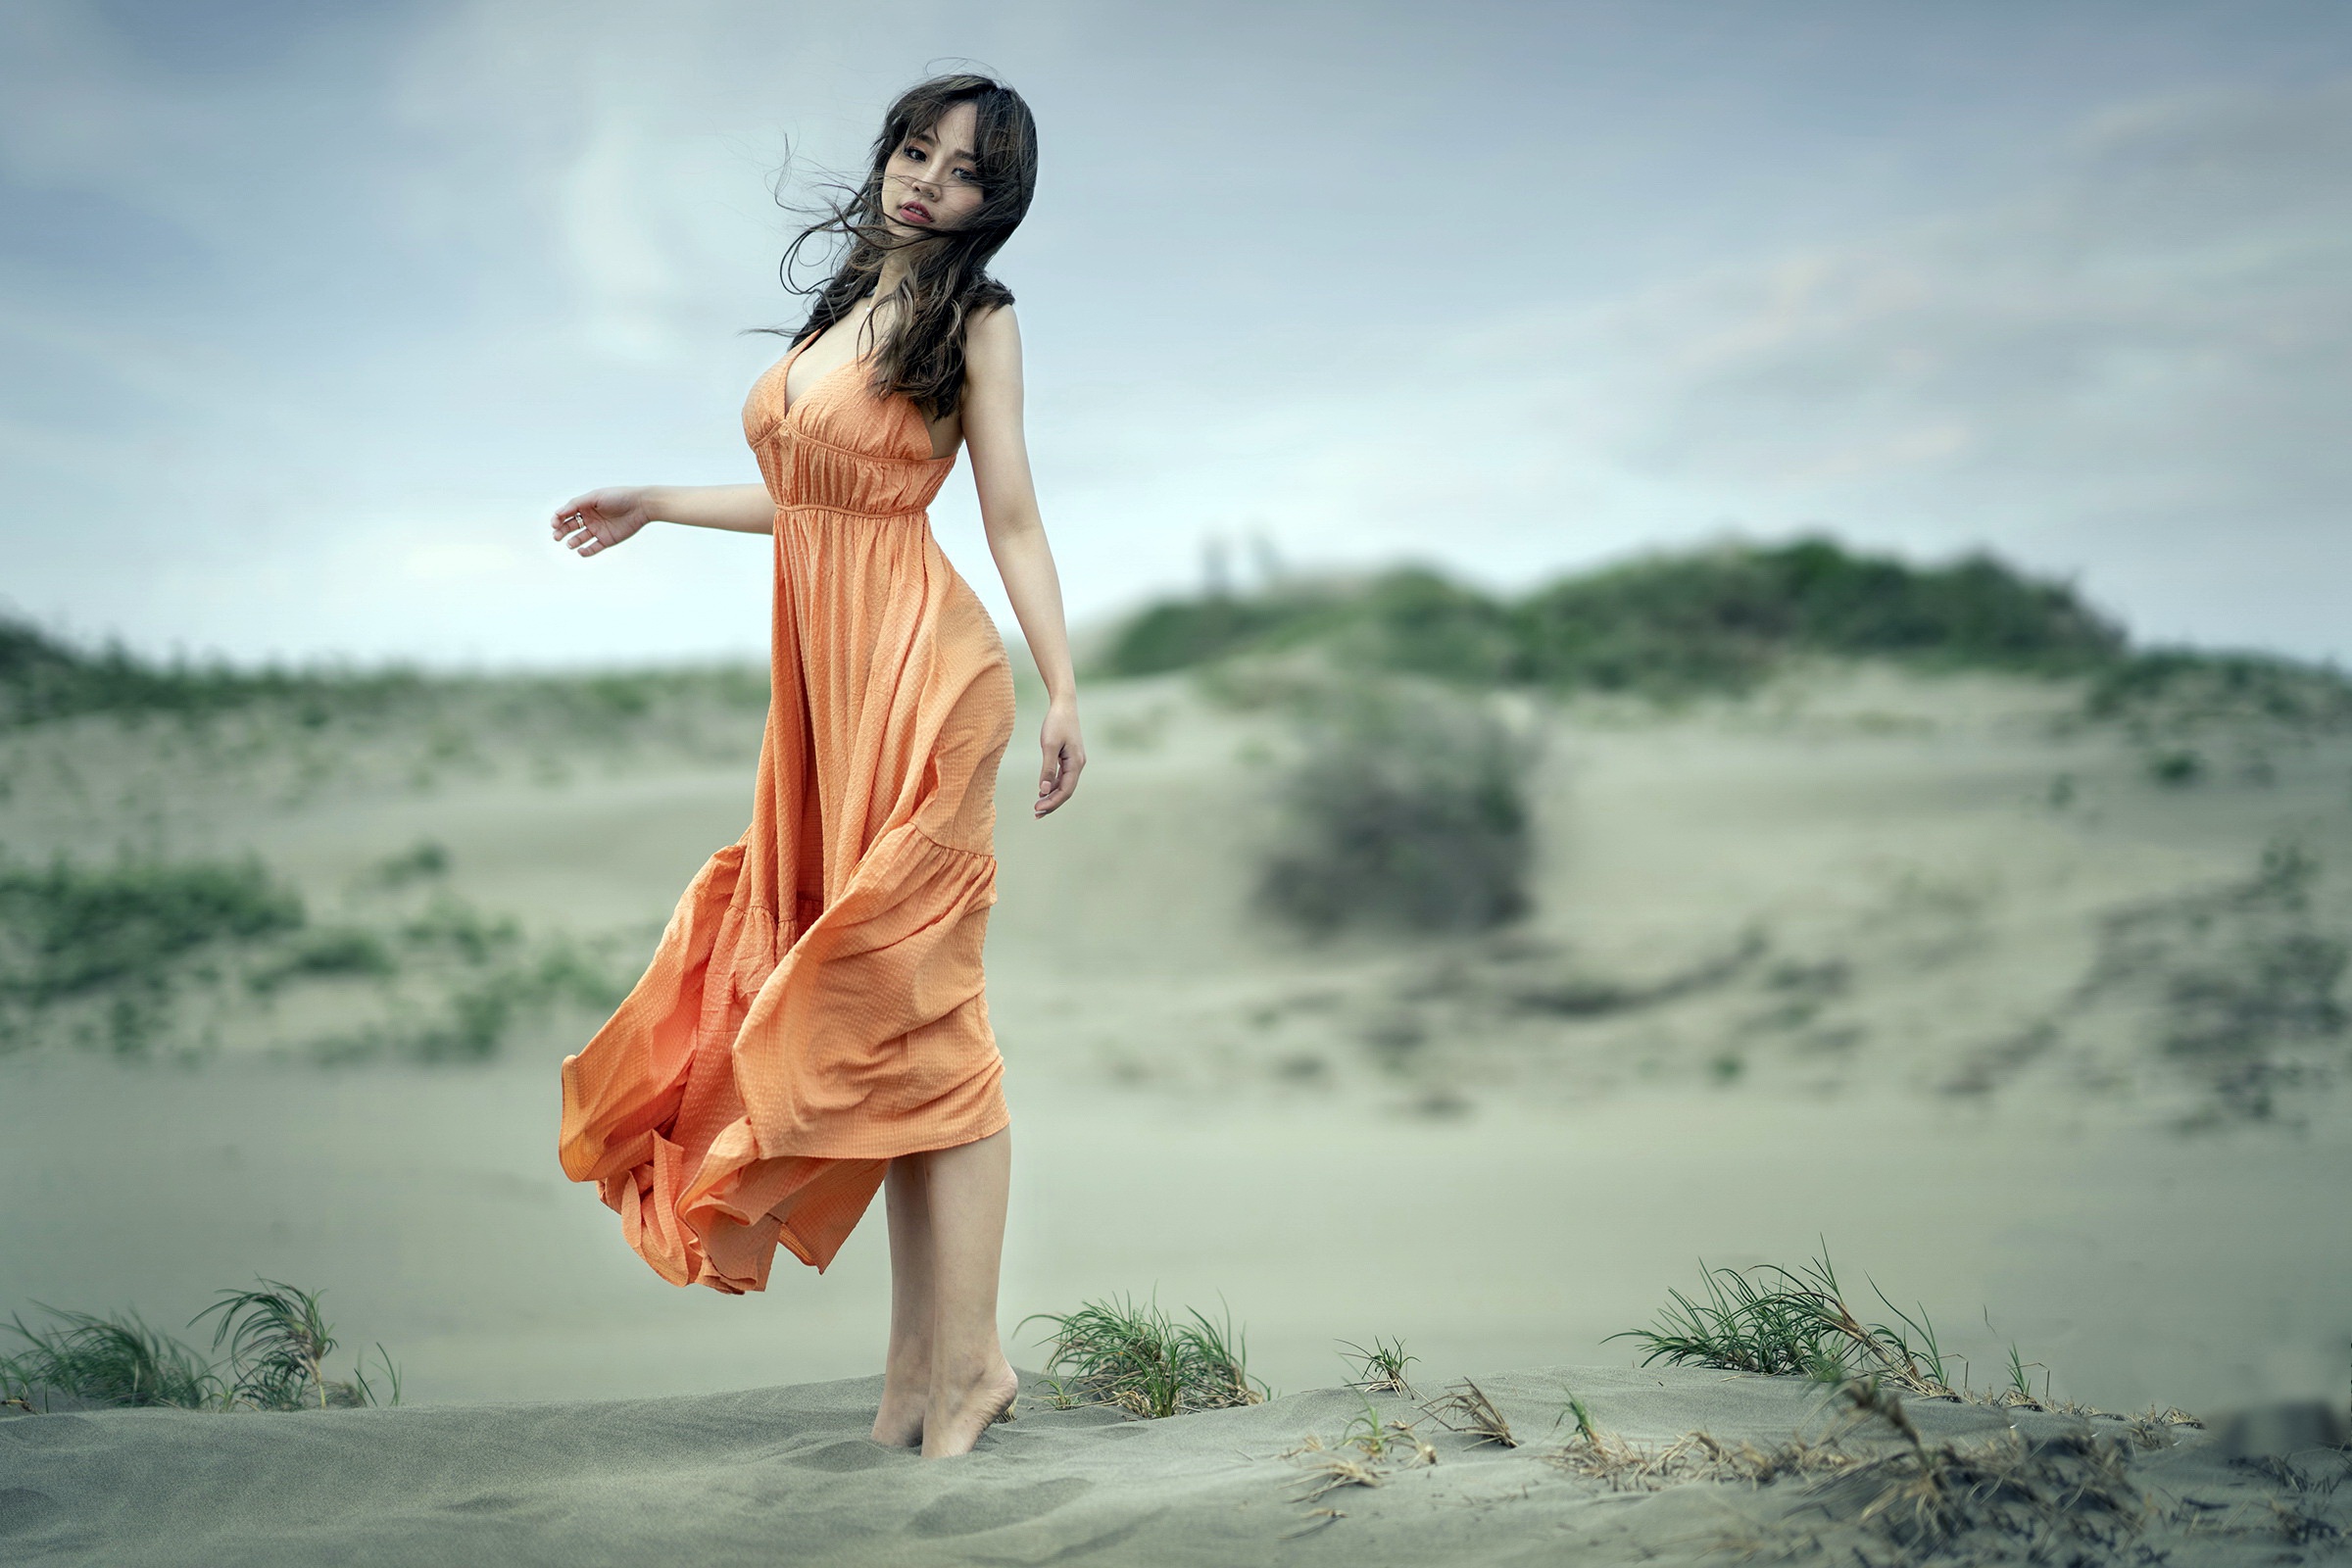 People 2400x1600 Asian women model dress orange dress women outdoors barefoot dark hair looking at viewer standing tiptoe brunette sand